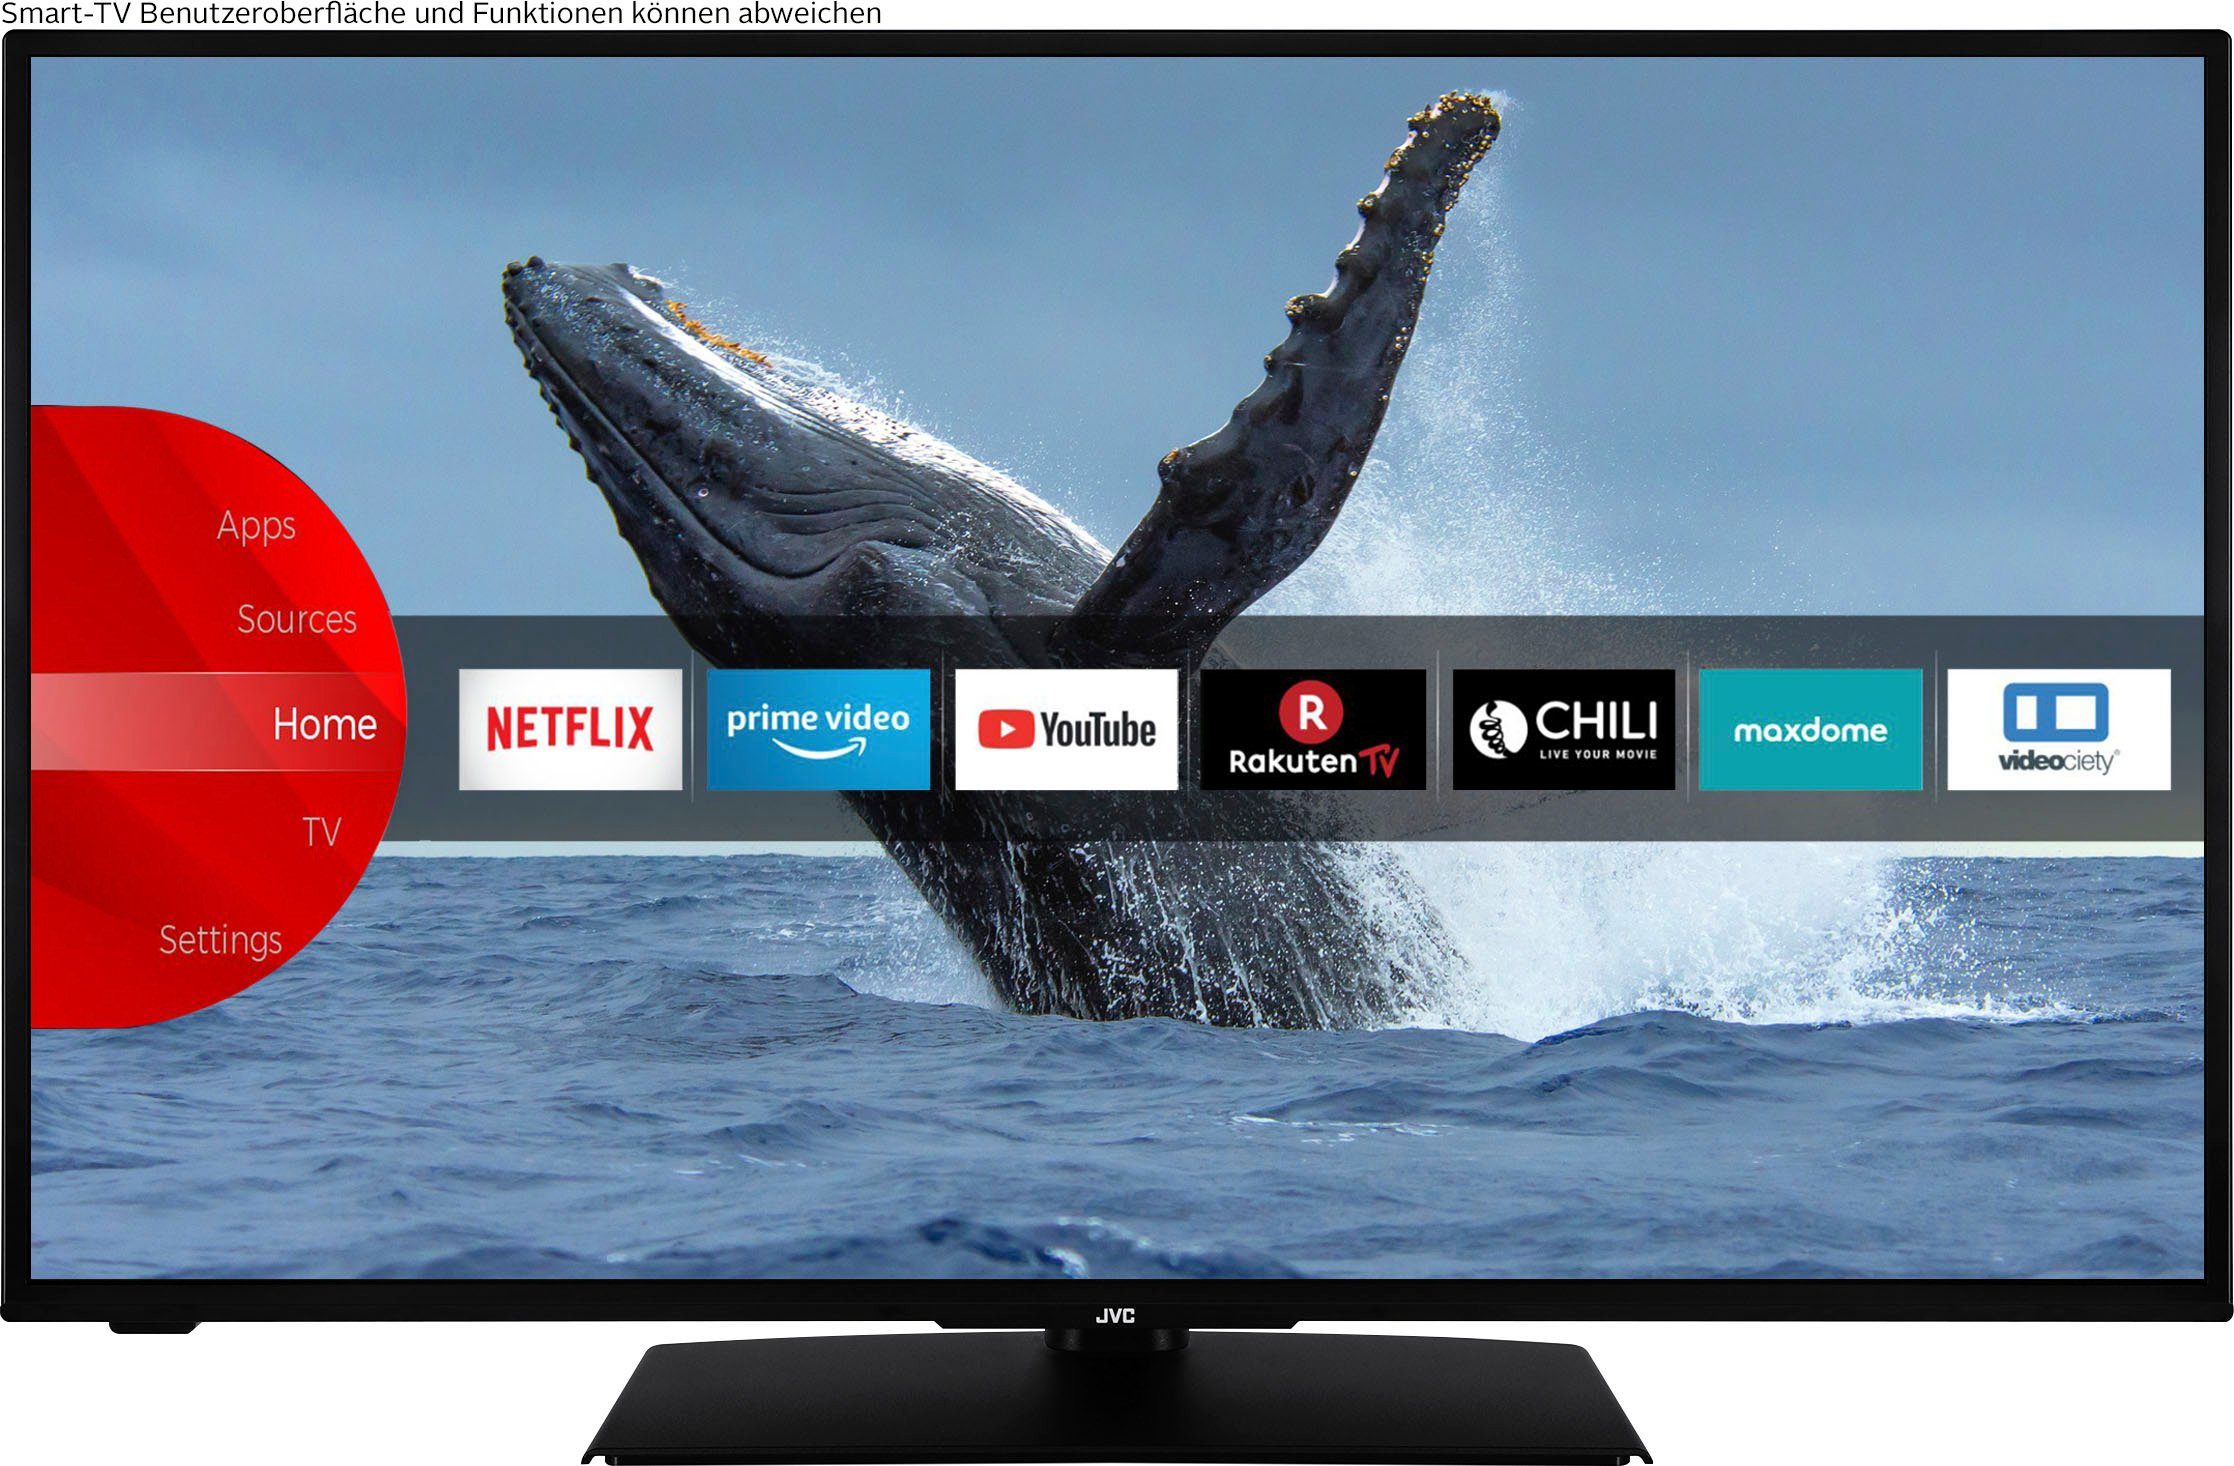 JVC LT-43VF5155 LCD-LED Fernseher (108 cm/43 Zoll, Full HD, Smart TV, HDR,  Triple-Tuner, Bluetooth, 6 Monate HD+ gratis)